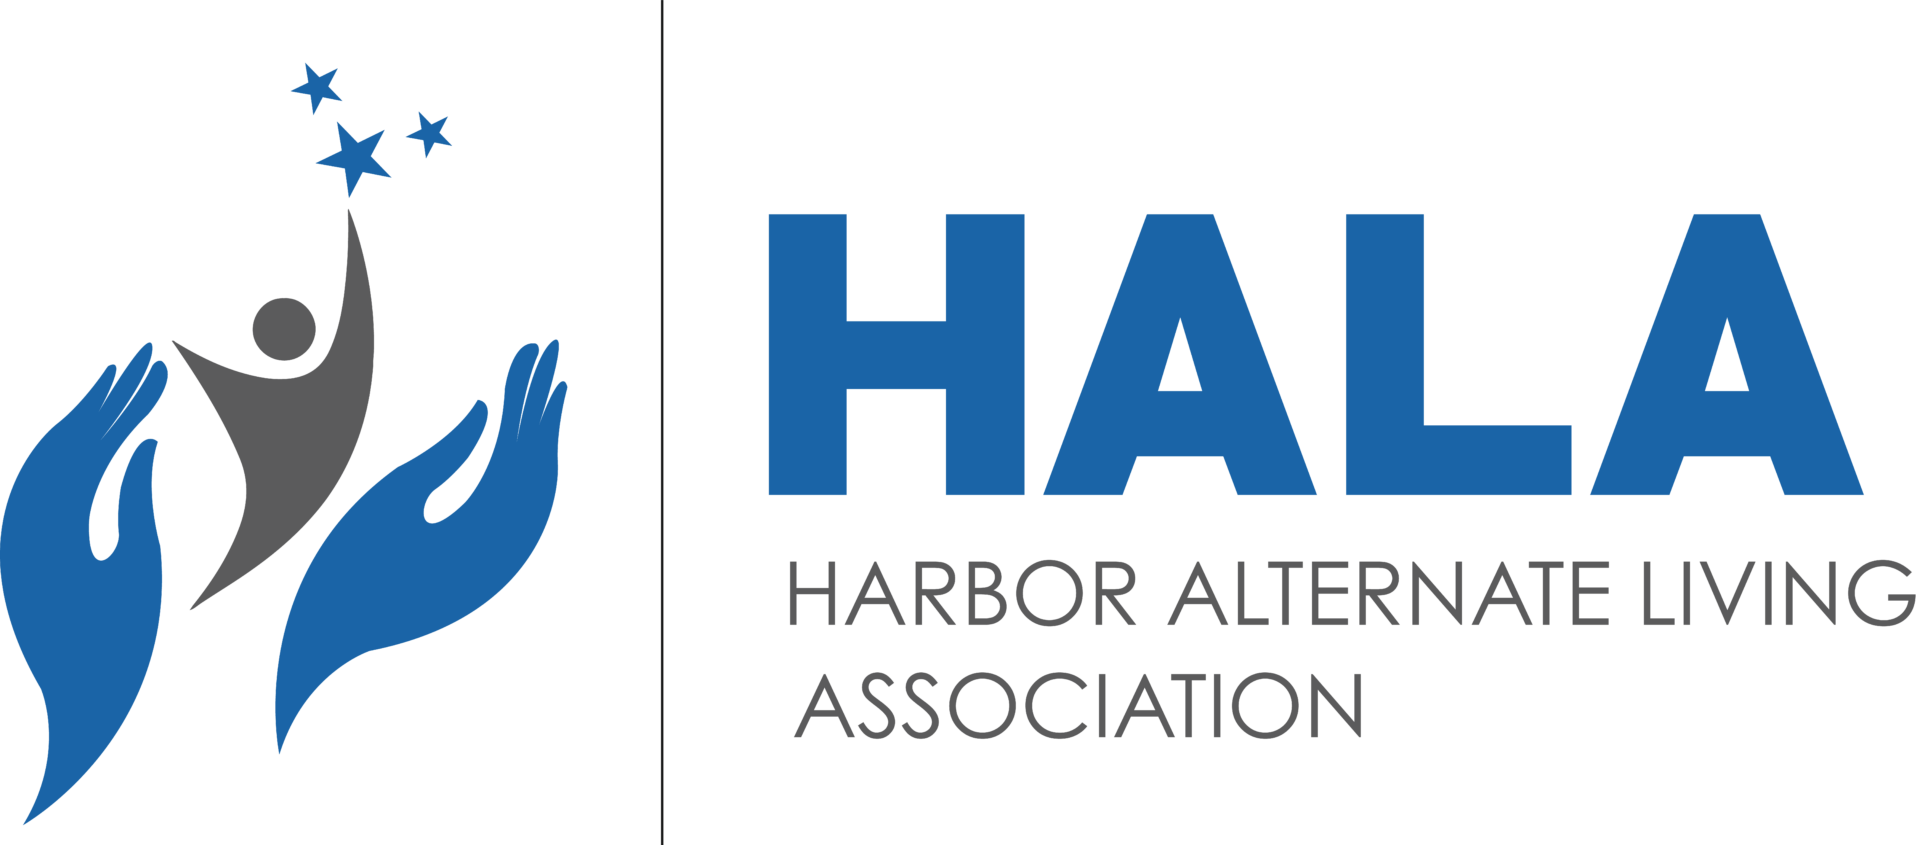 Harbor Alternate Living Association